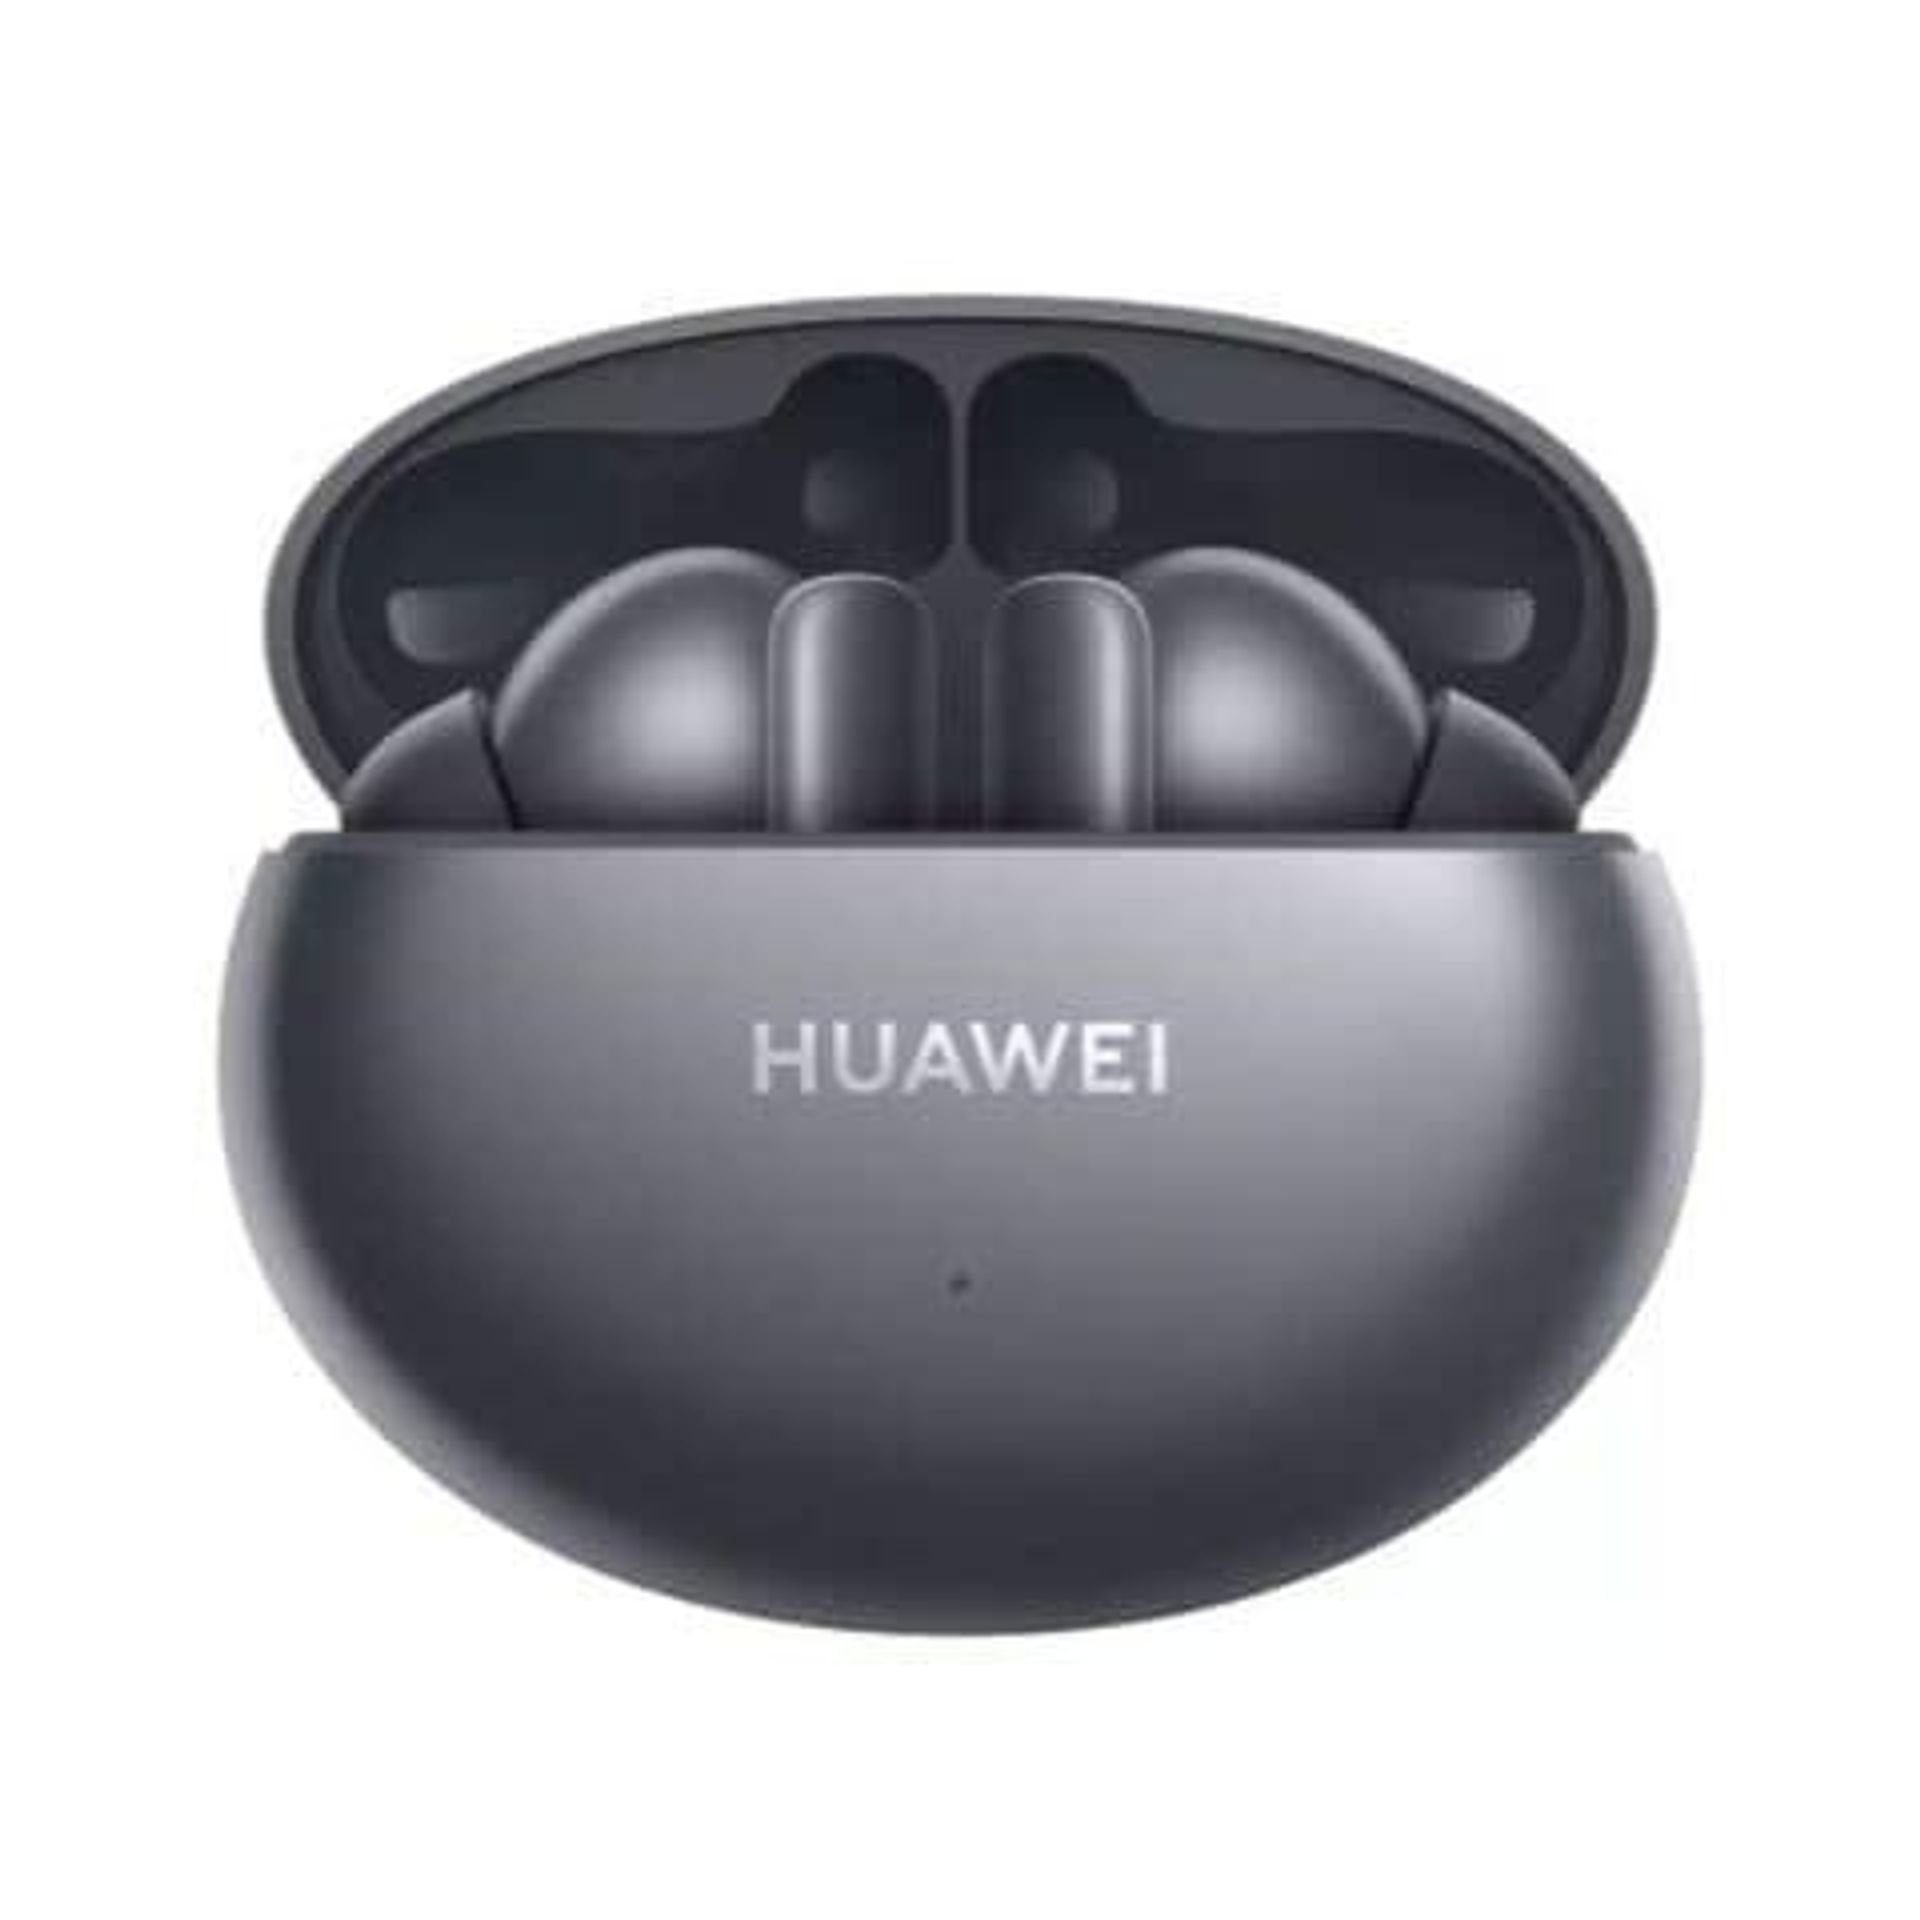 Huawei freebuds купить москва. Наушники true Wireless Huawei freebuds 4i Silver Frost (t0001). Беспроводные наушники Huawei freebuds 4i. Huawei freebuds 4i true Wireless Silver Frost. Наушники Huawei freebuds 4.